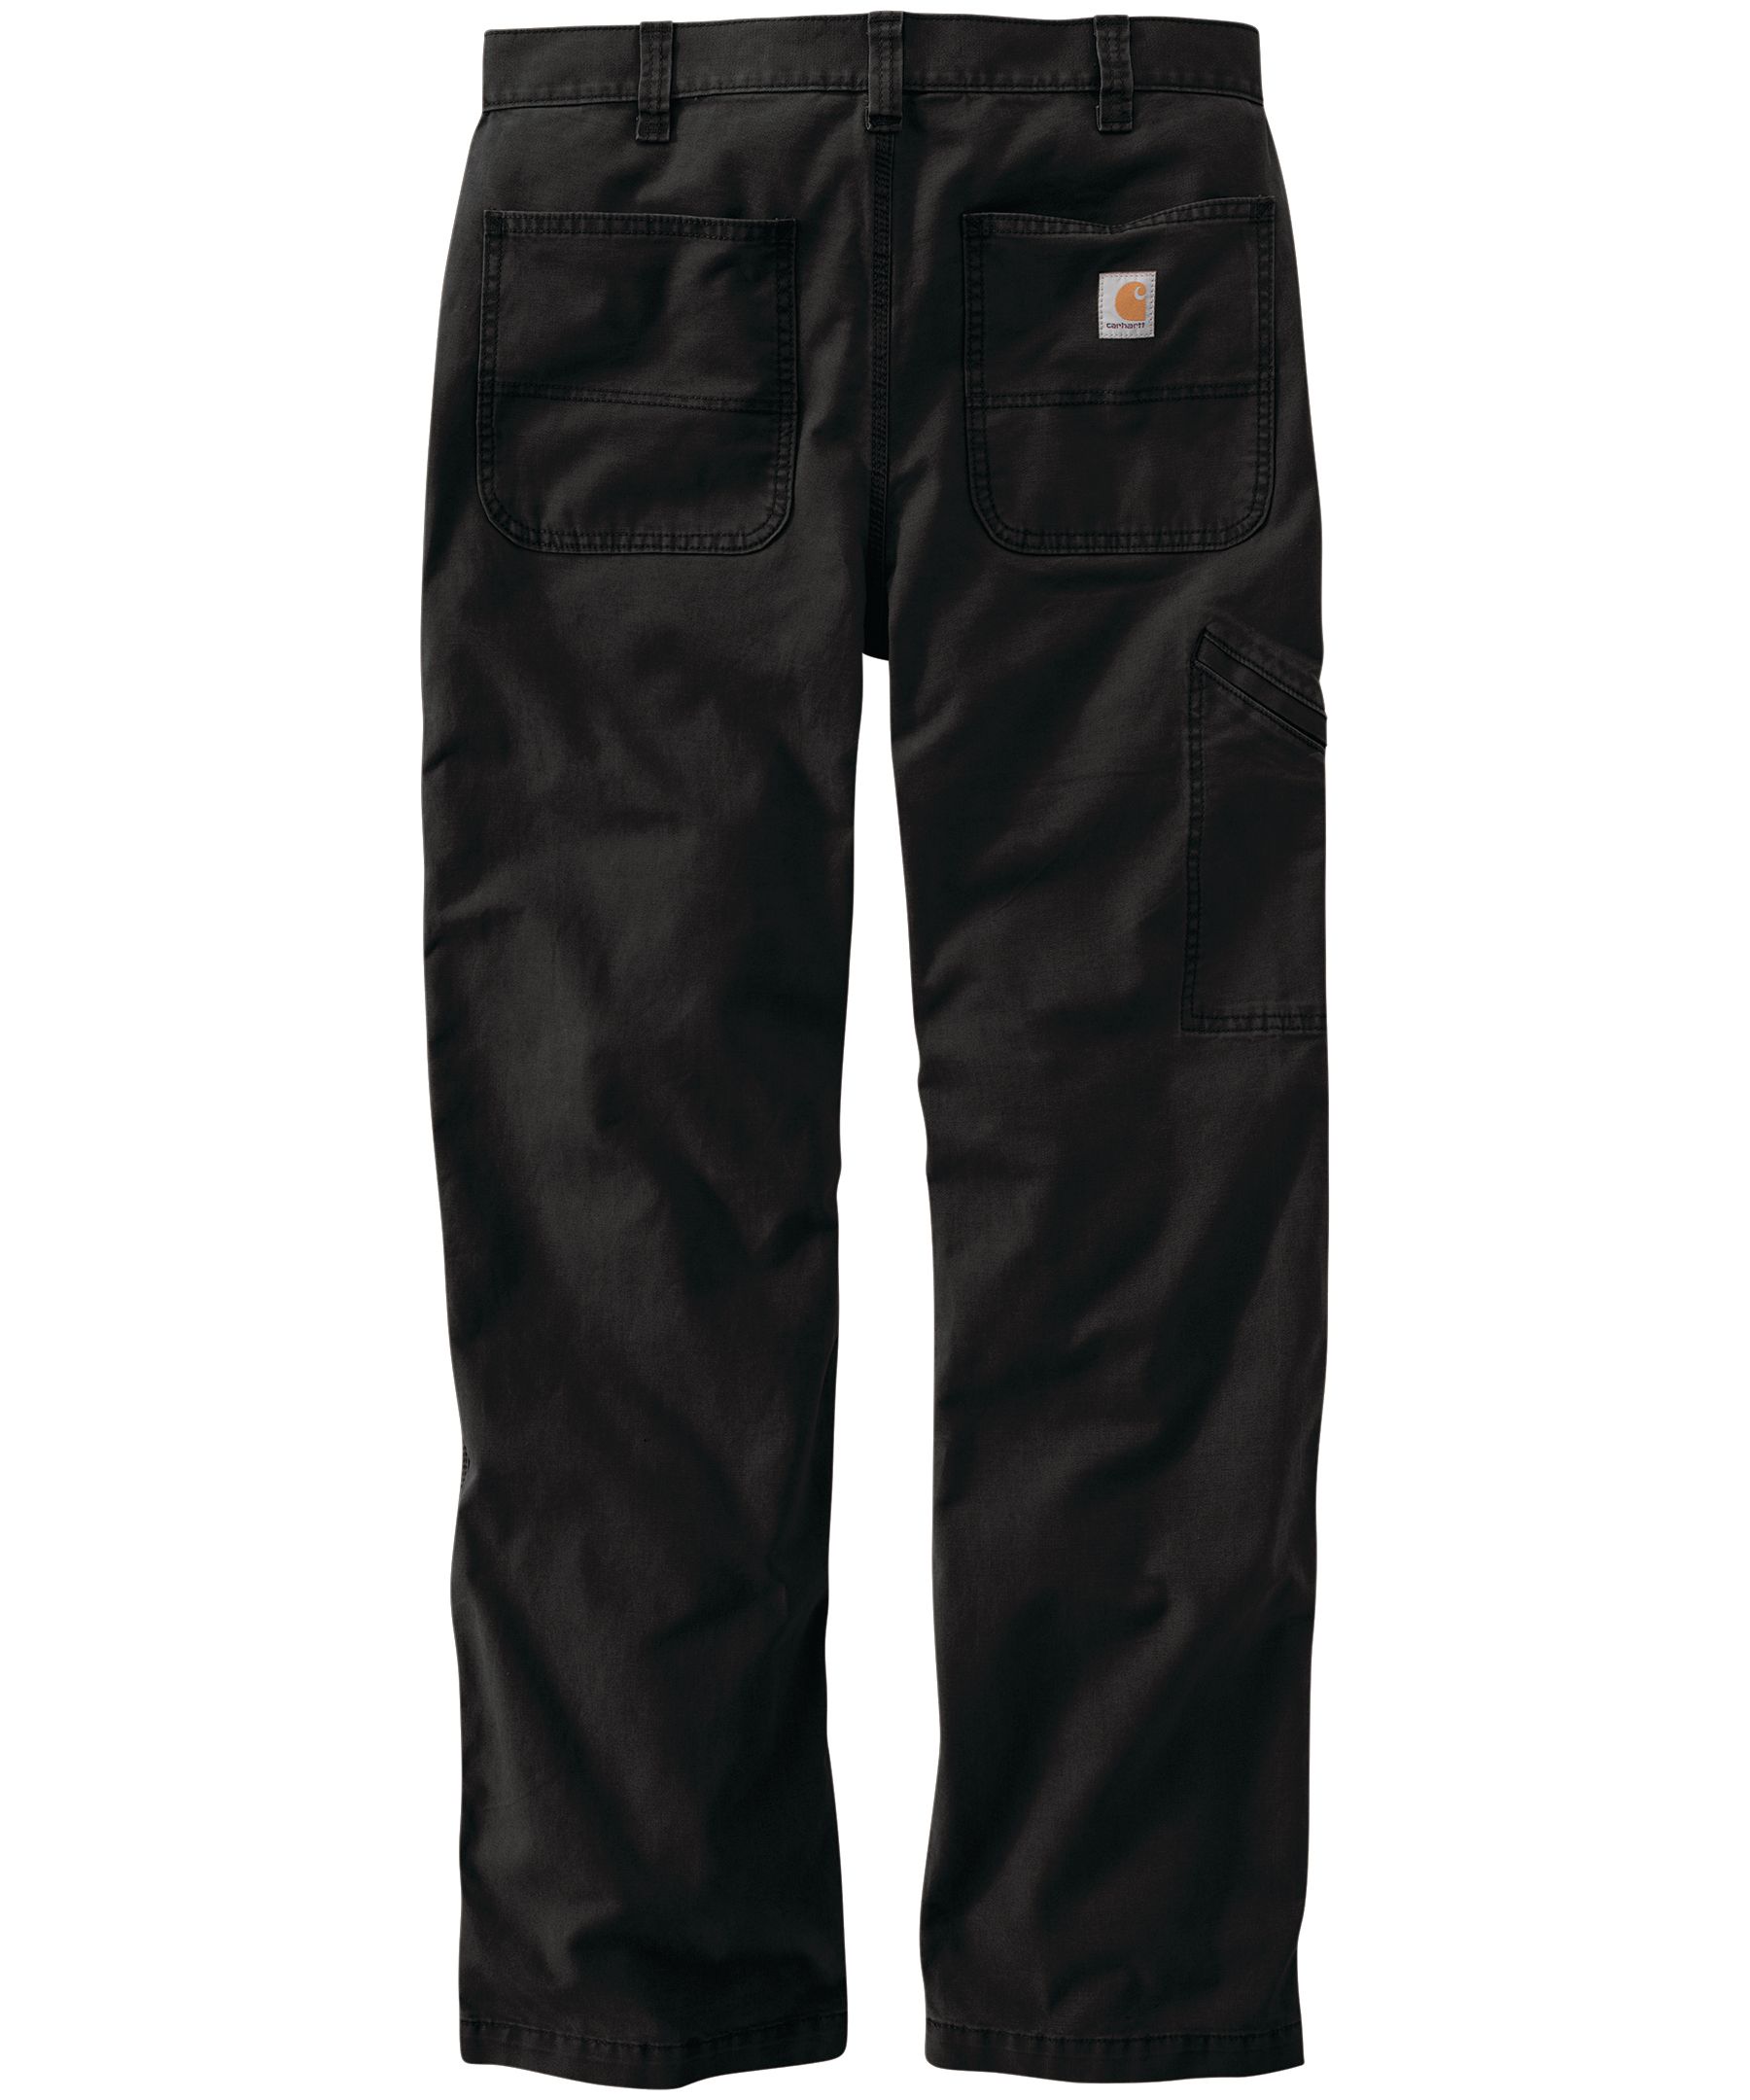 Dakota WorkPro Series Men's Stretch Poly/Cotton Cargo Work Shorts